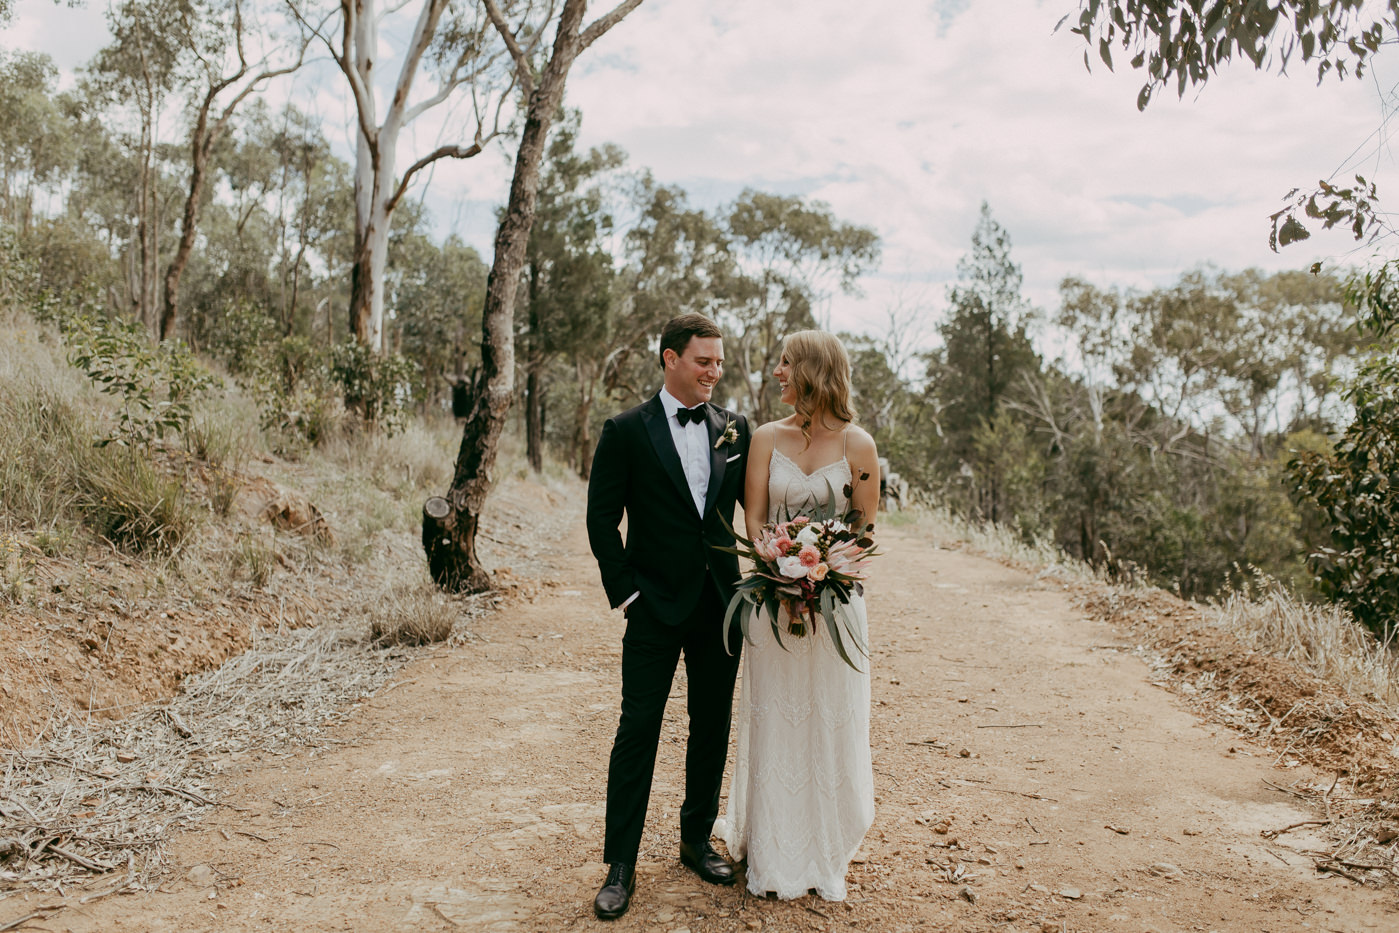 Anthony & Eliet - Wagga Wagga Wedding - Country NSW - Samantha Heather Photography-51.jpg